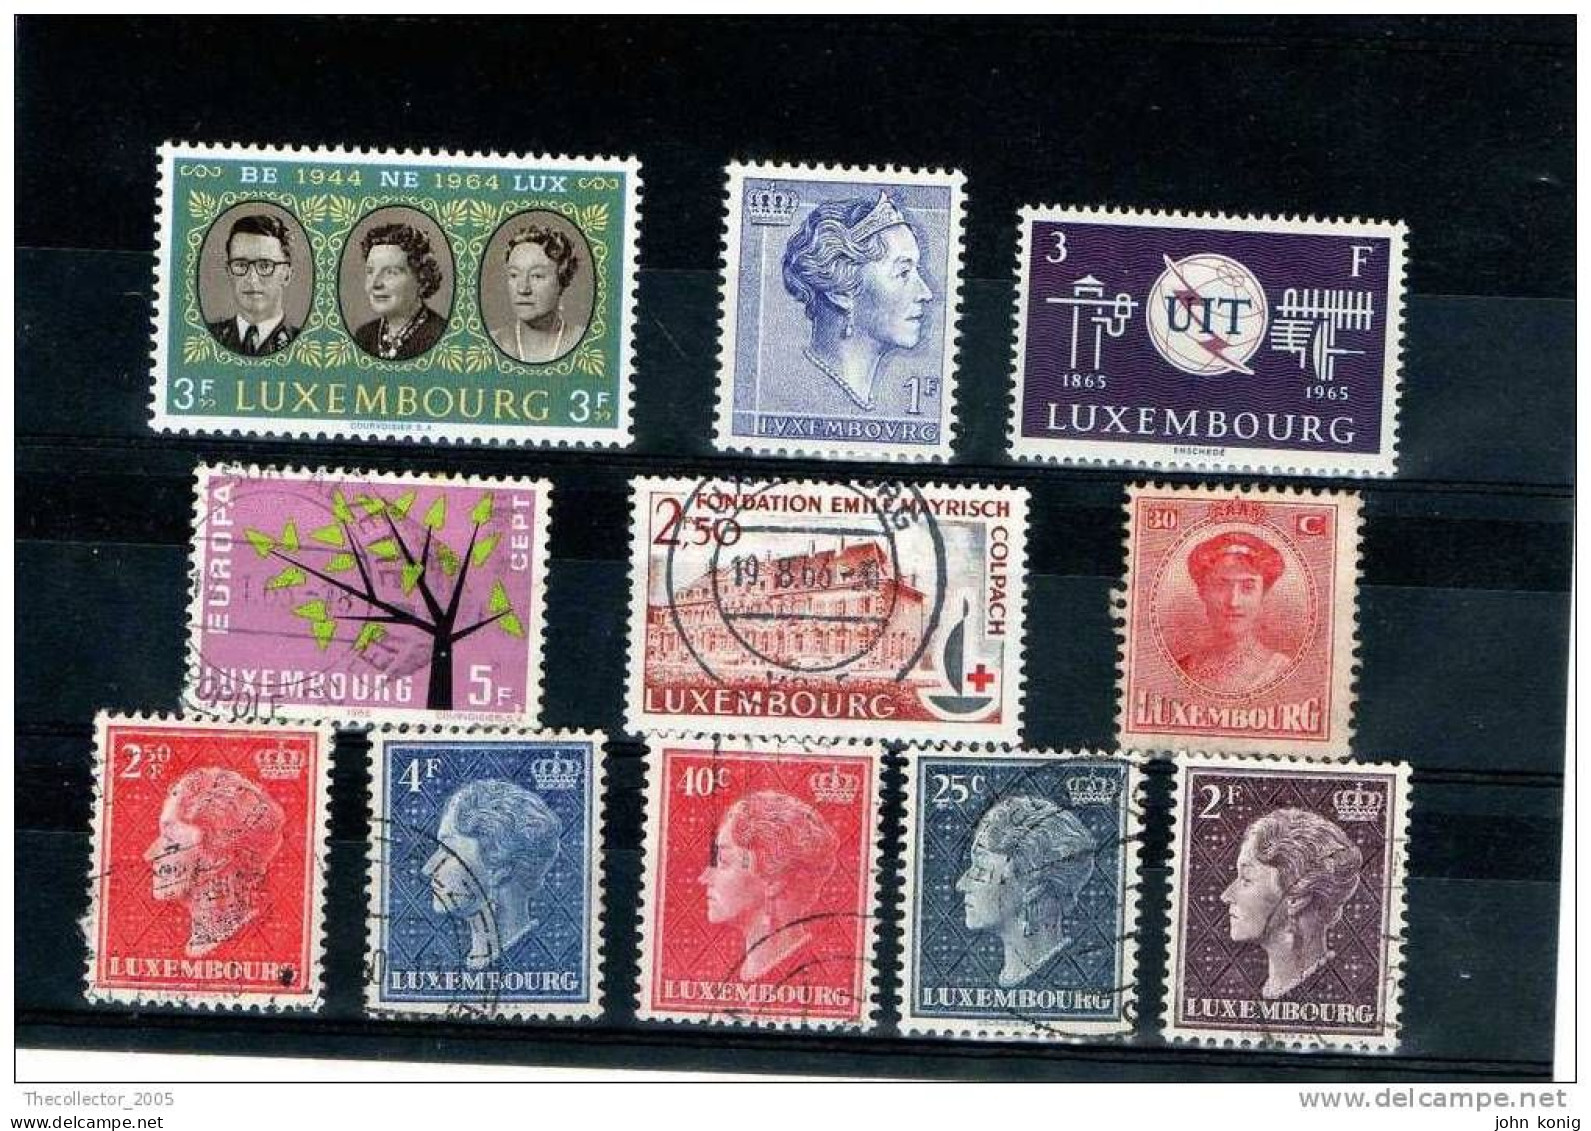 Lussemburgo - Luxembourg - Lotto Francobolli - Stamps Lot - Sammlungen